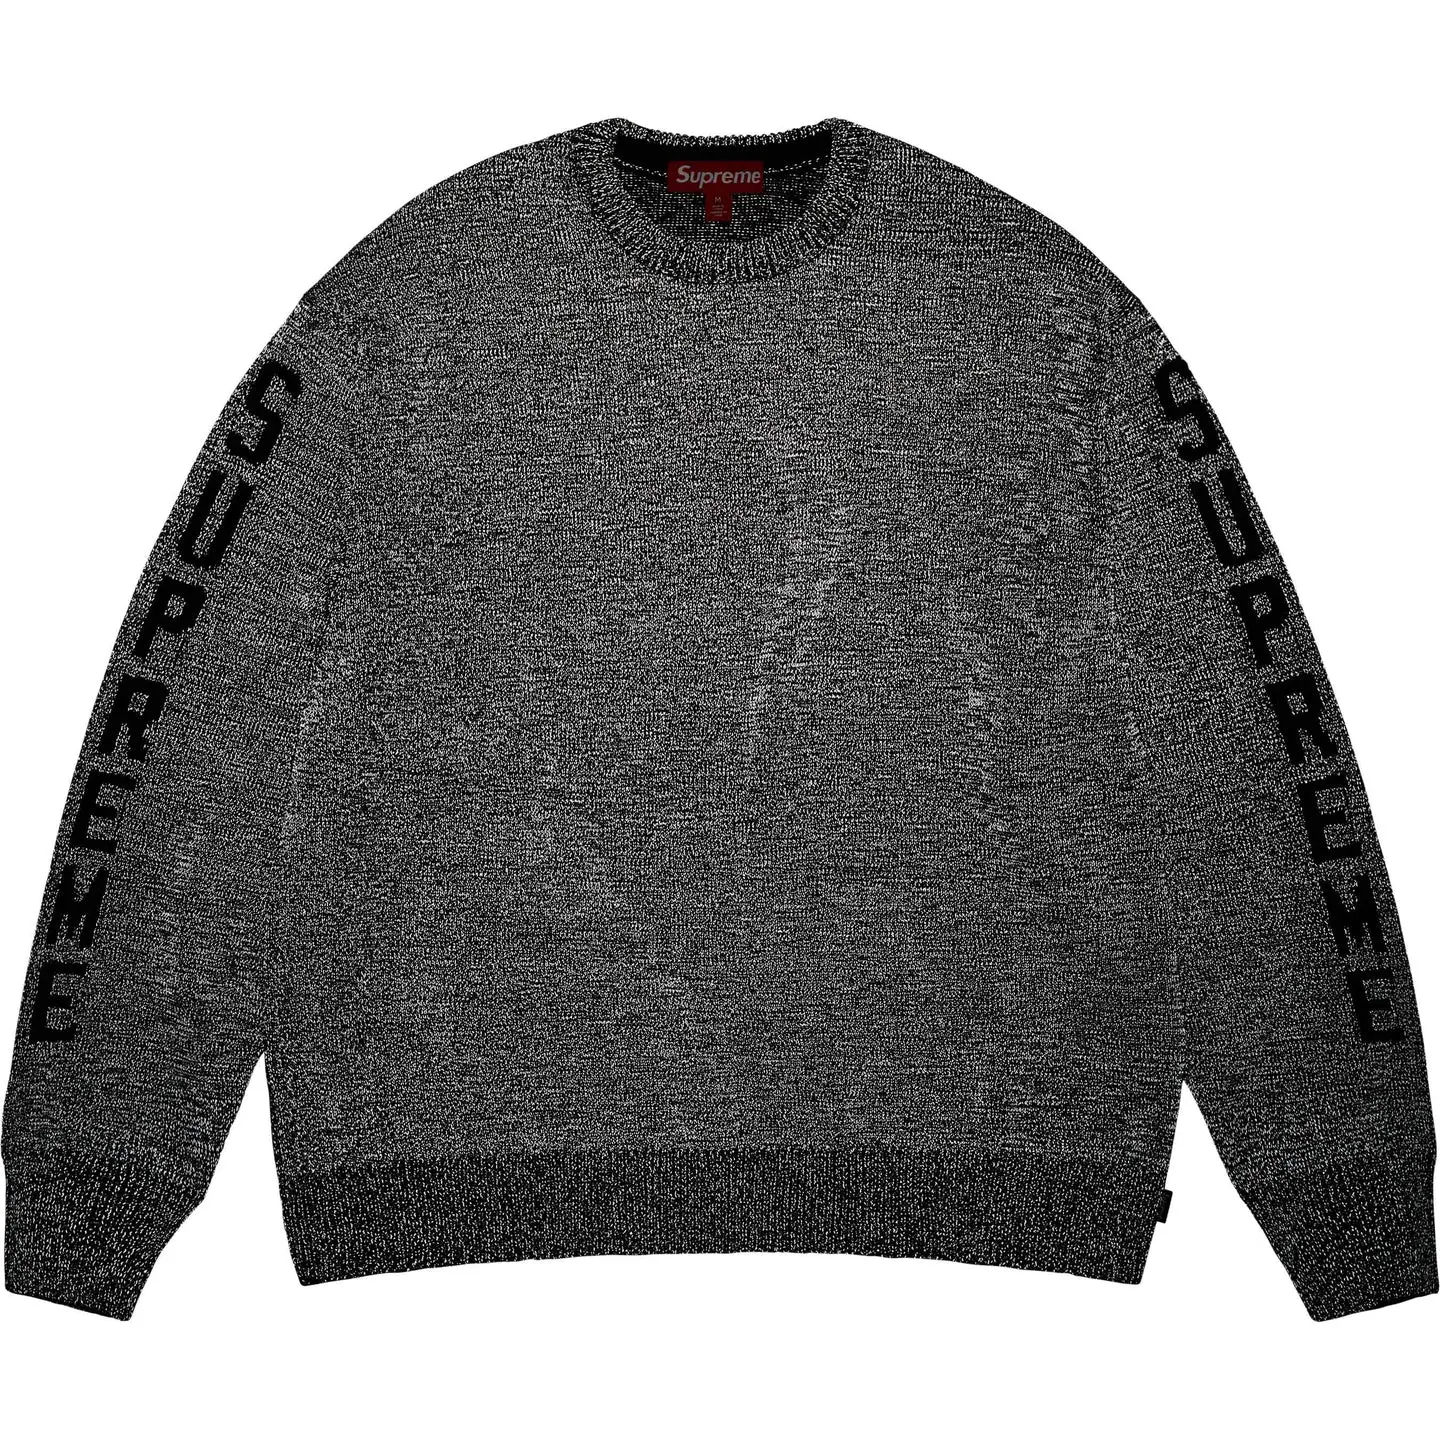 Supreme Reflective Sweater